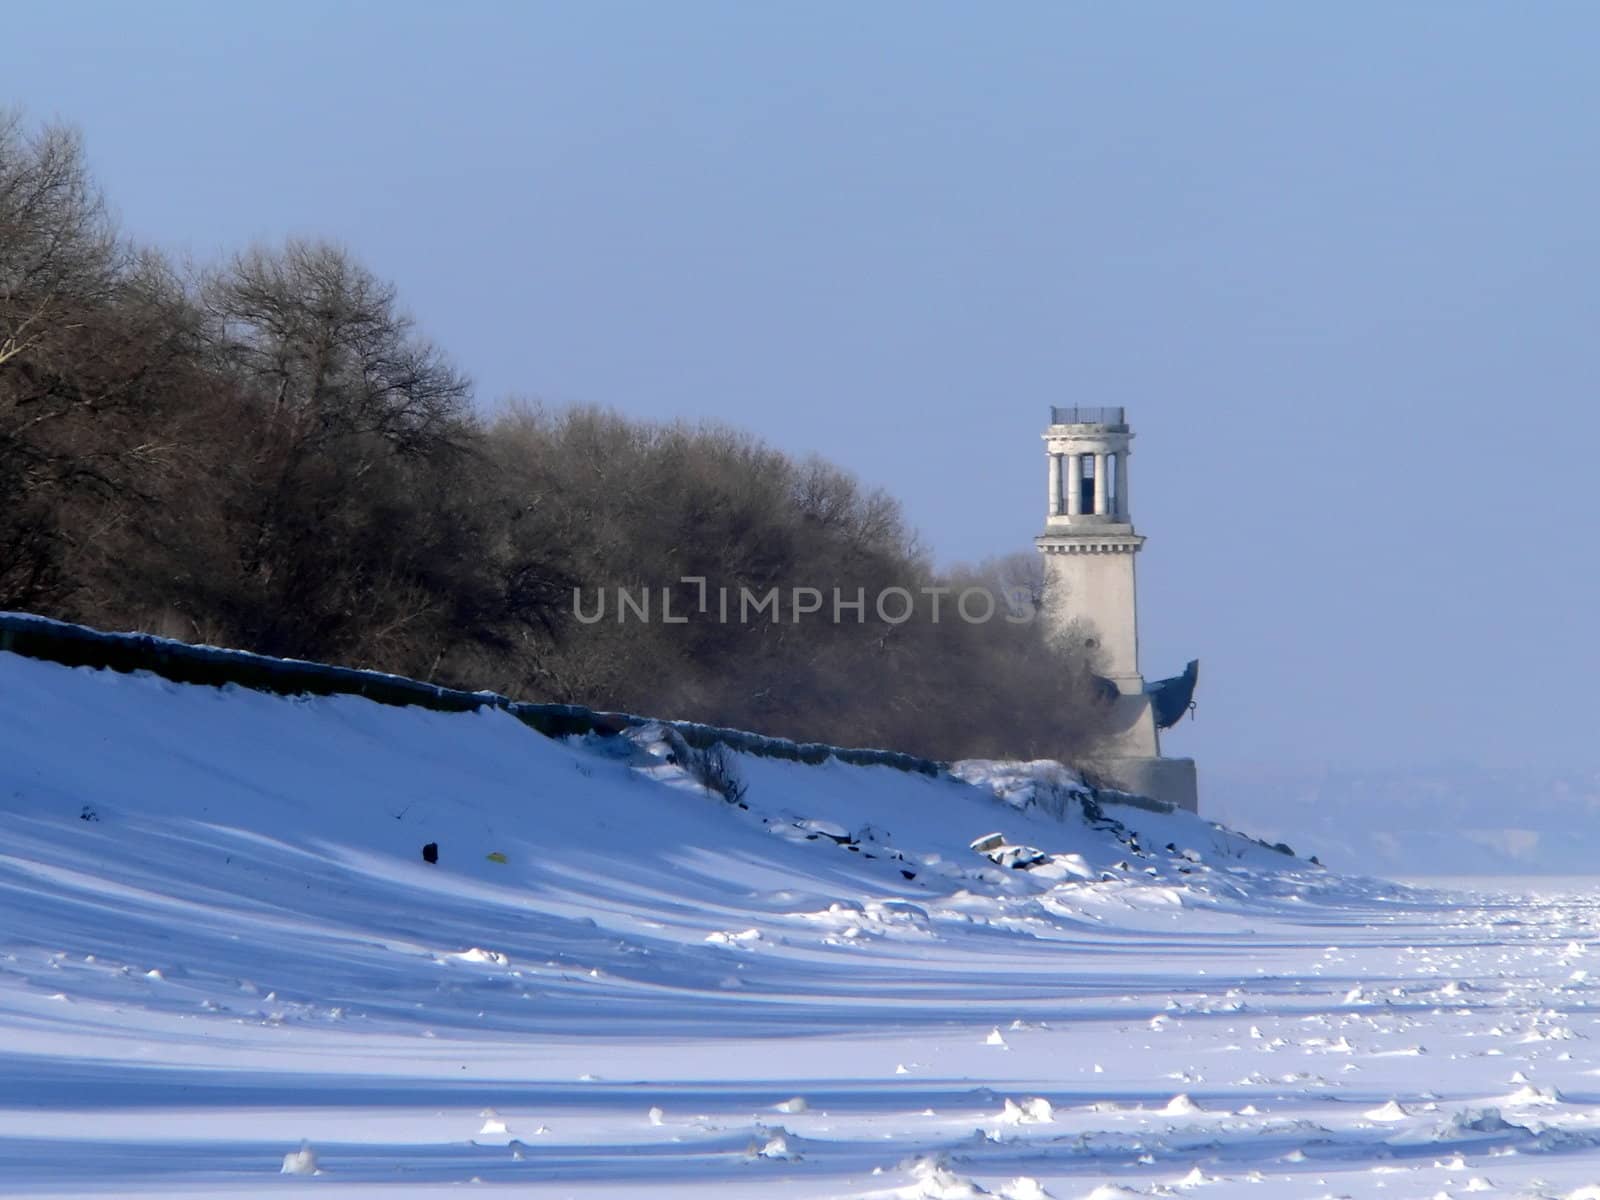 Lighthouse on winters sea